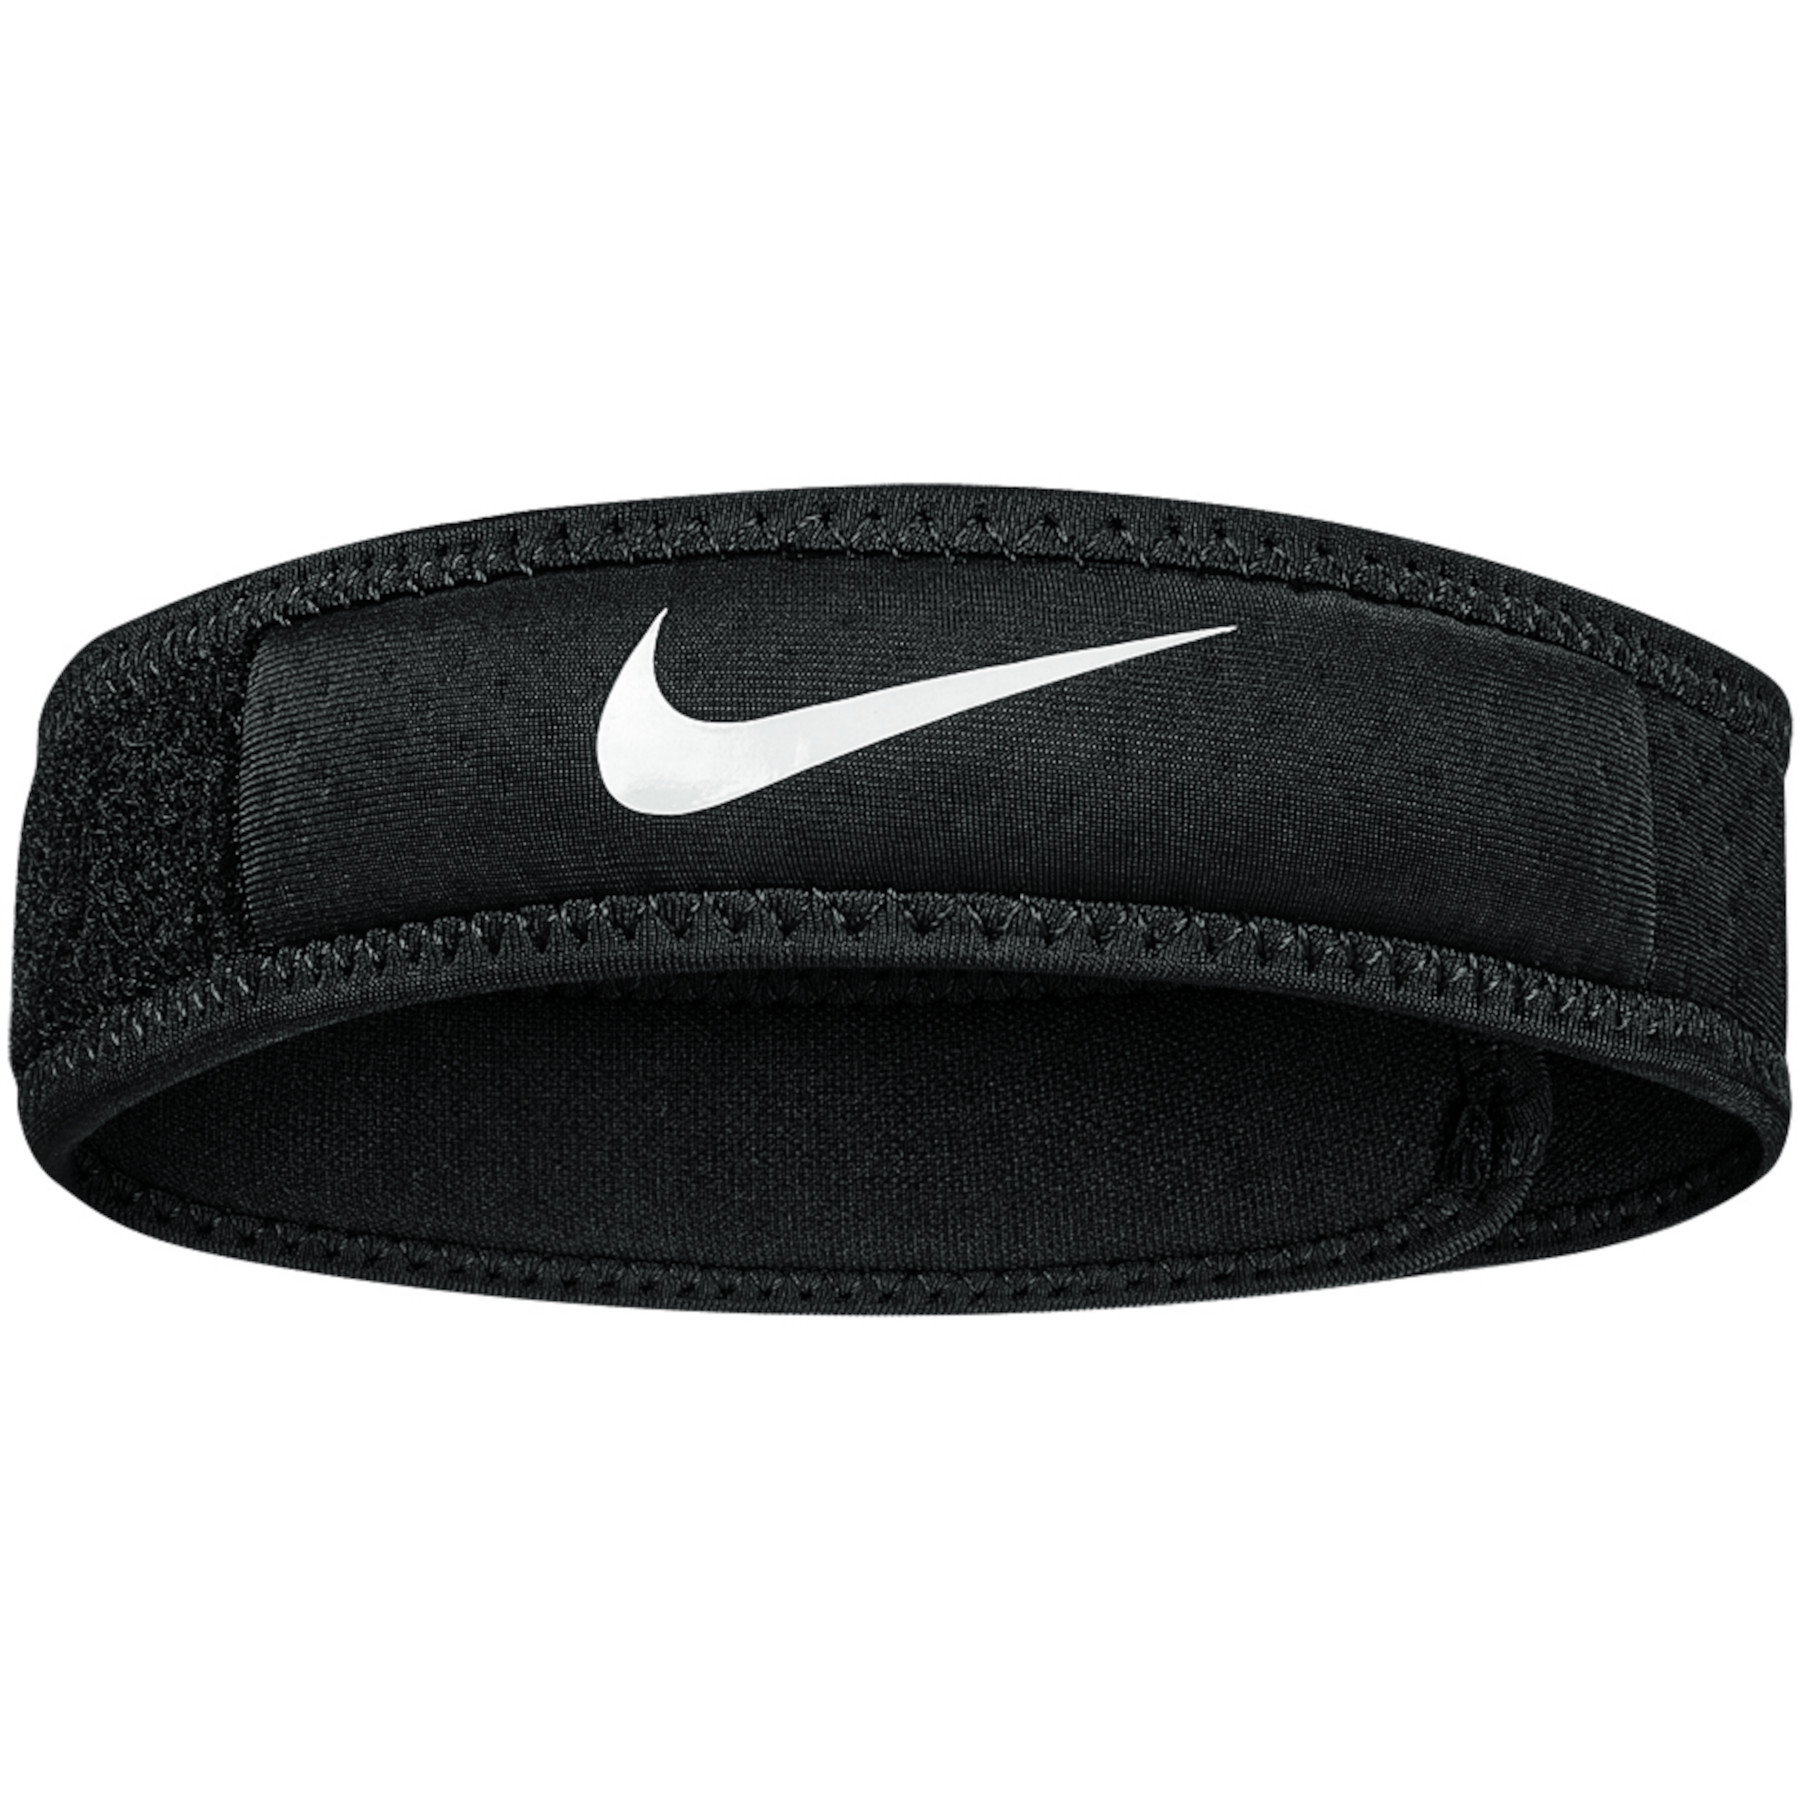 Bild von Nike Pro Patella Knie Bandage 3.0 - black/white 010